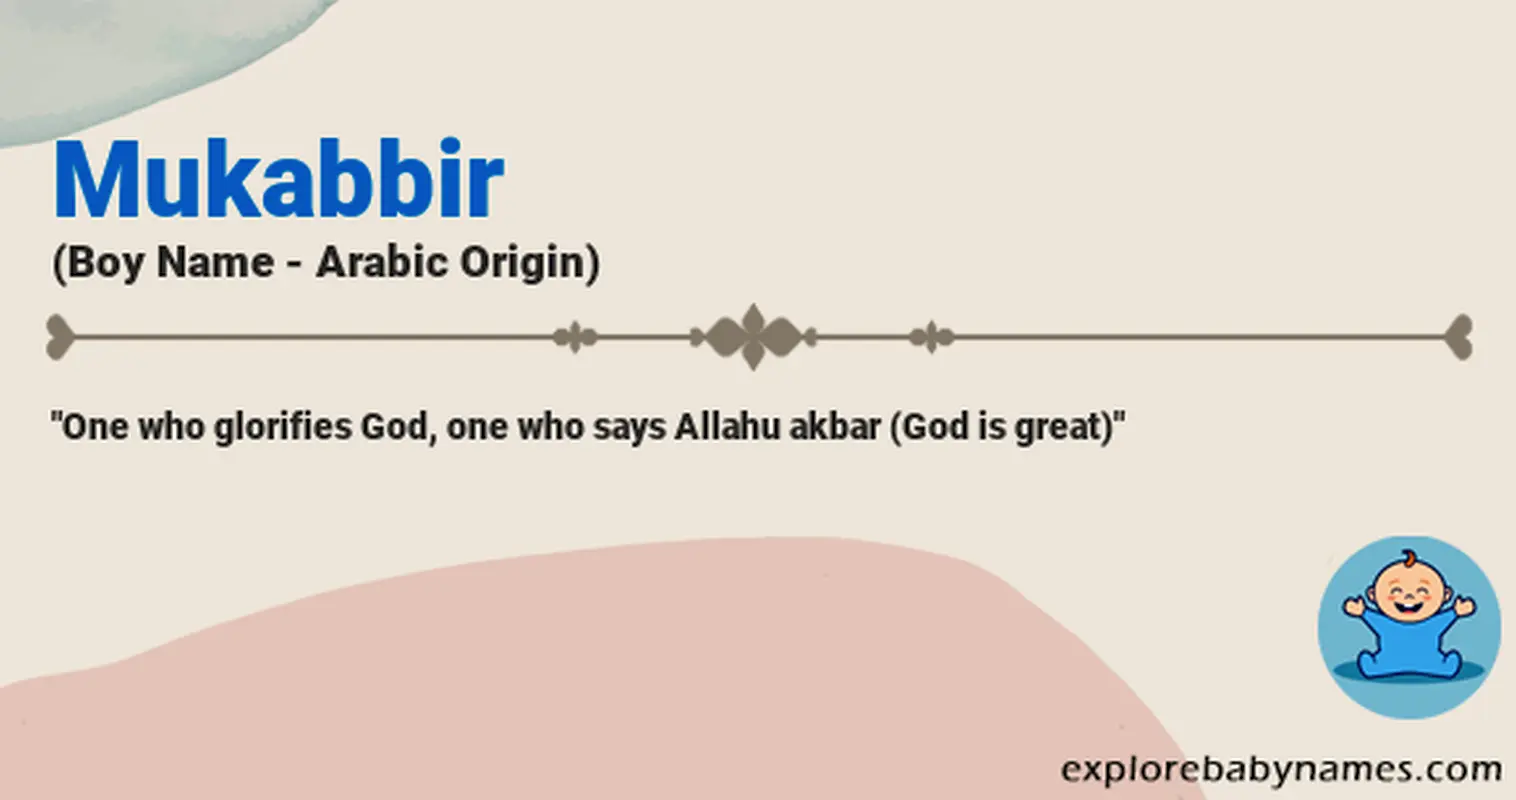 Meaning of Mukabbir